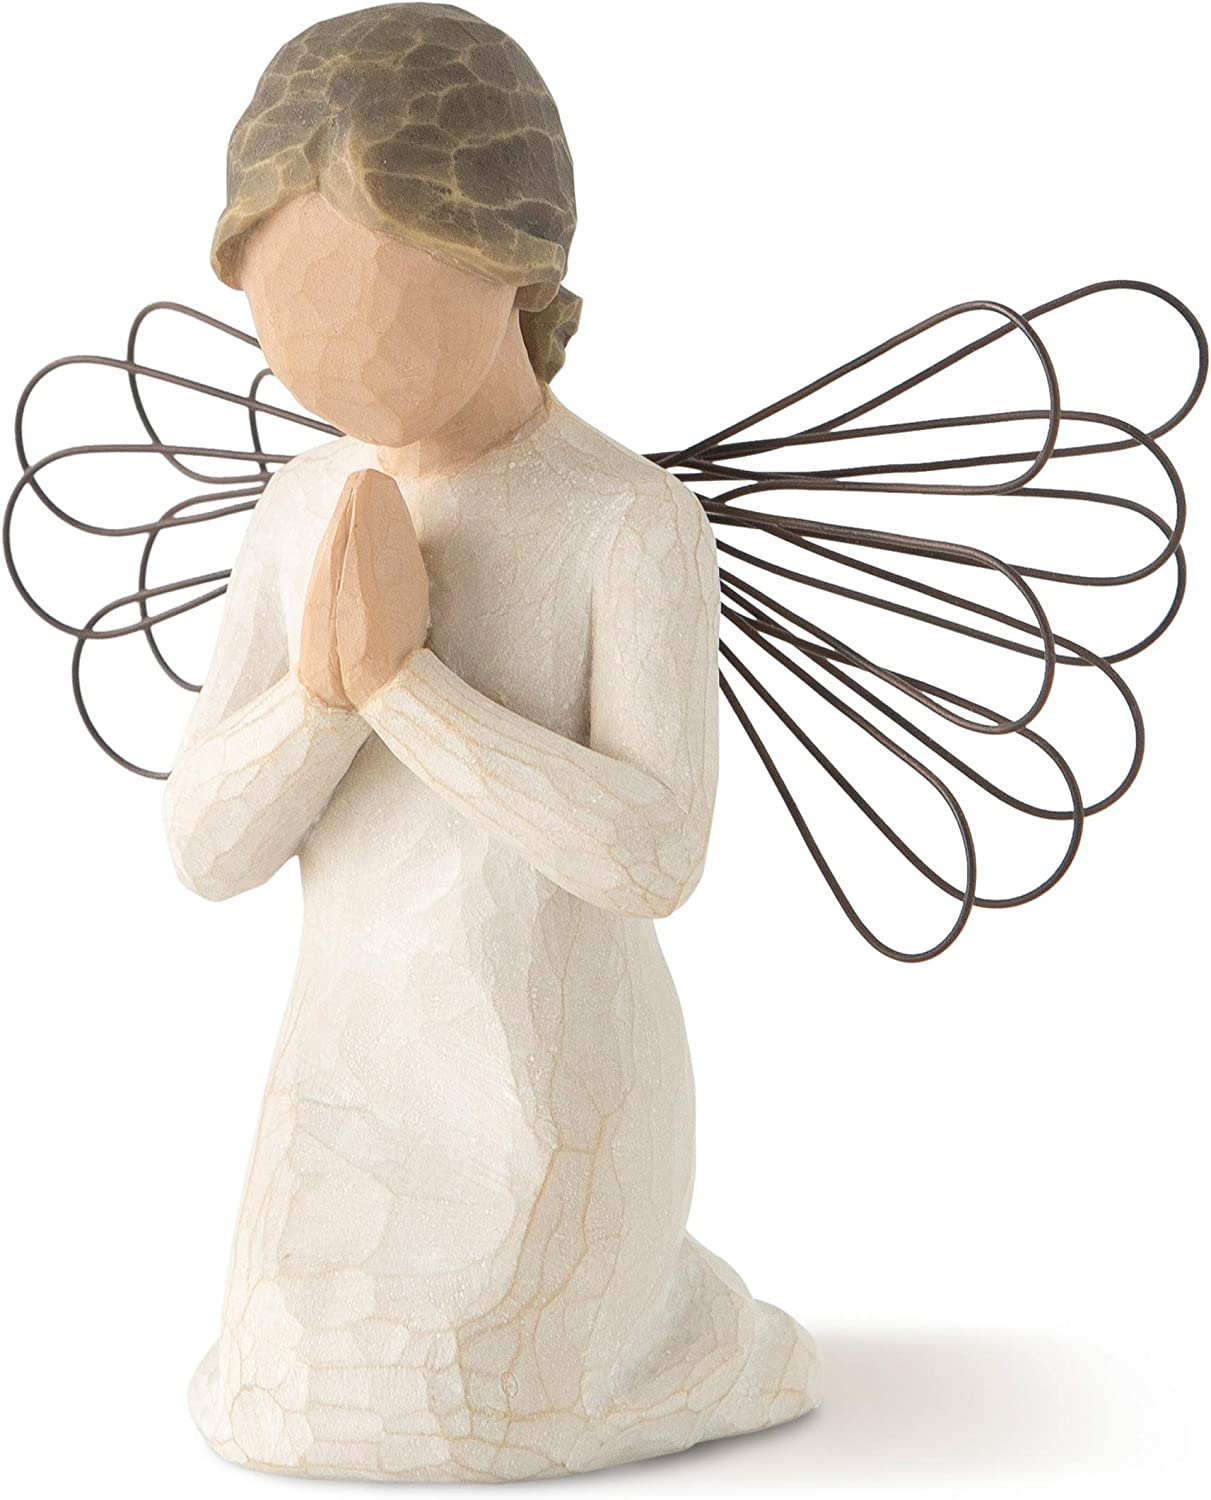 Kneeling Angel in Prayer Figurine